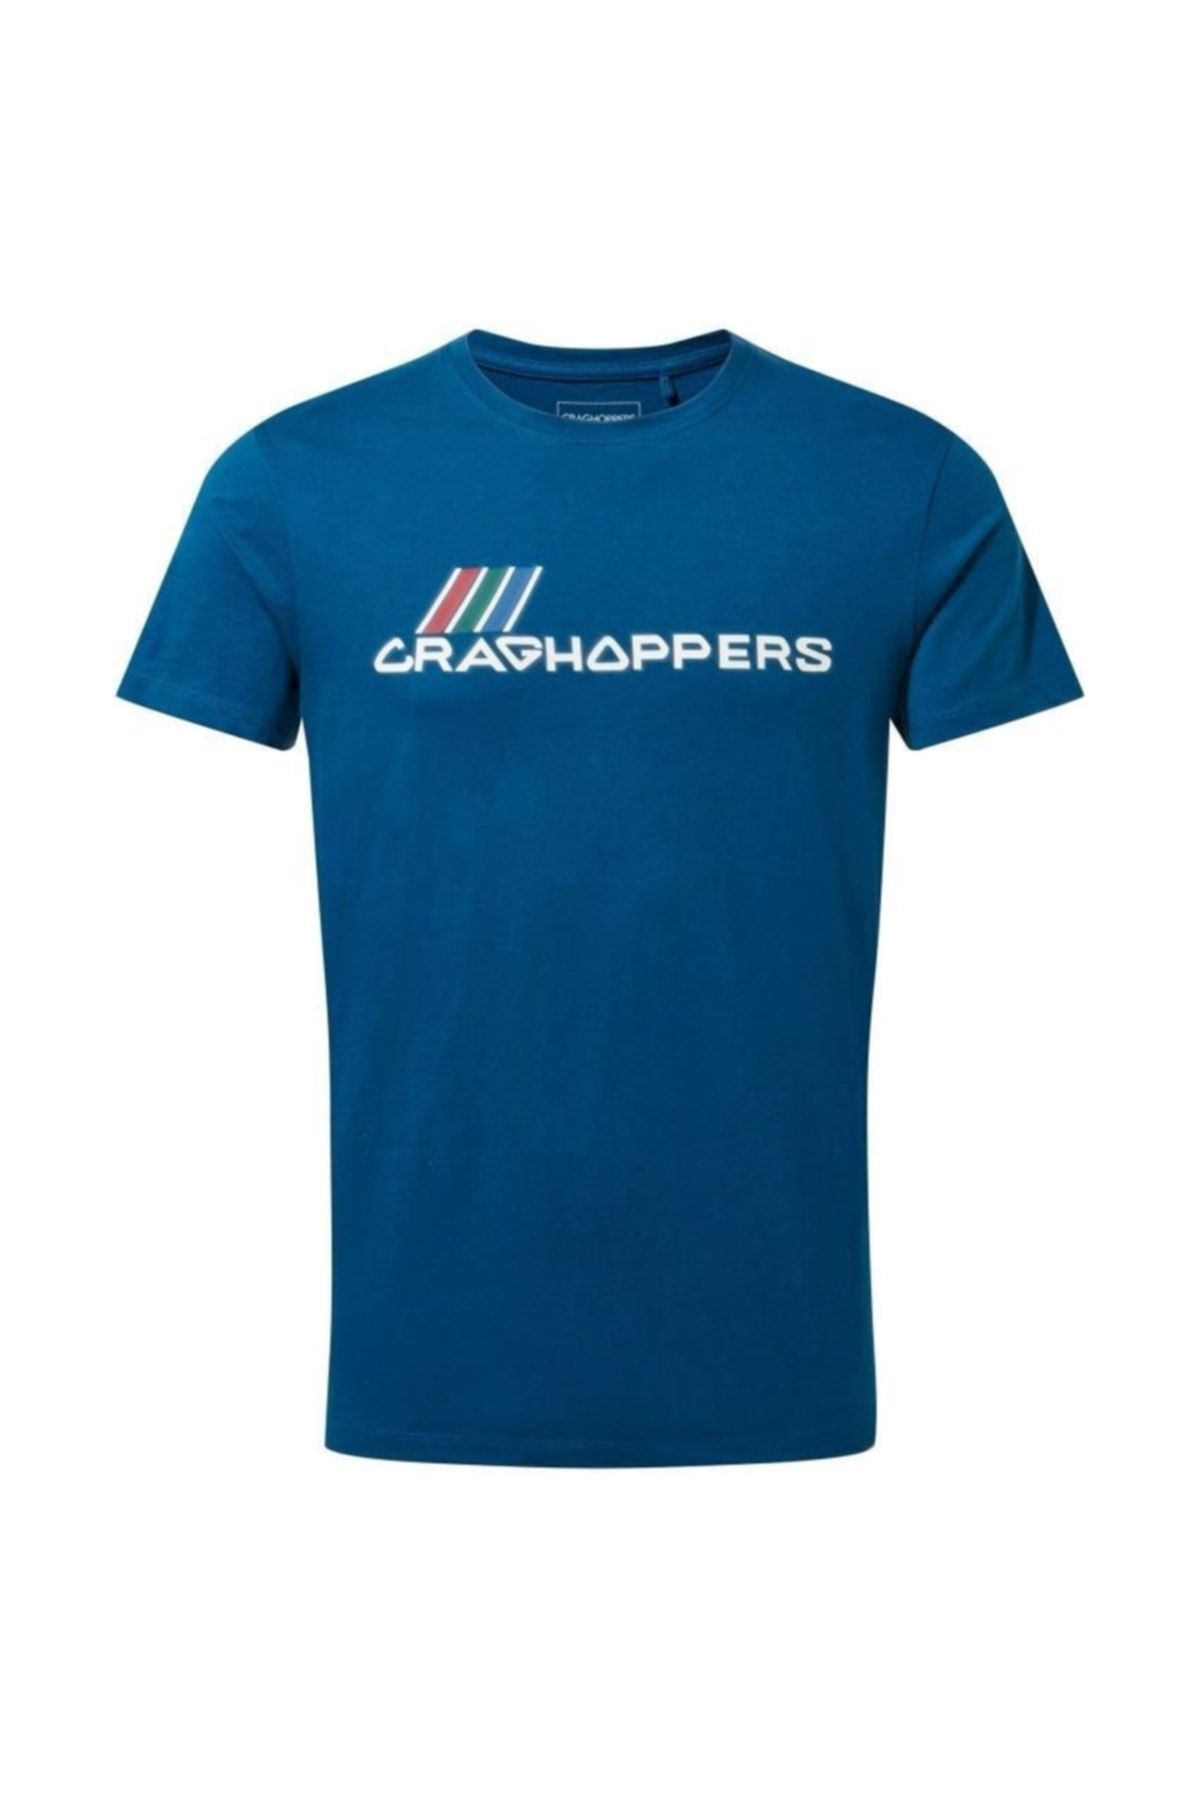 Craghoppers Mens Mightie Ss T-shirt Erkek Mavi Kısa Kollu Tişört Cmt936